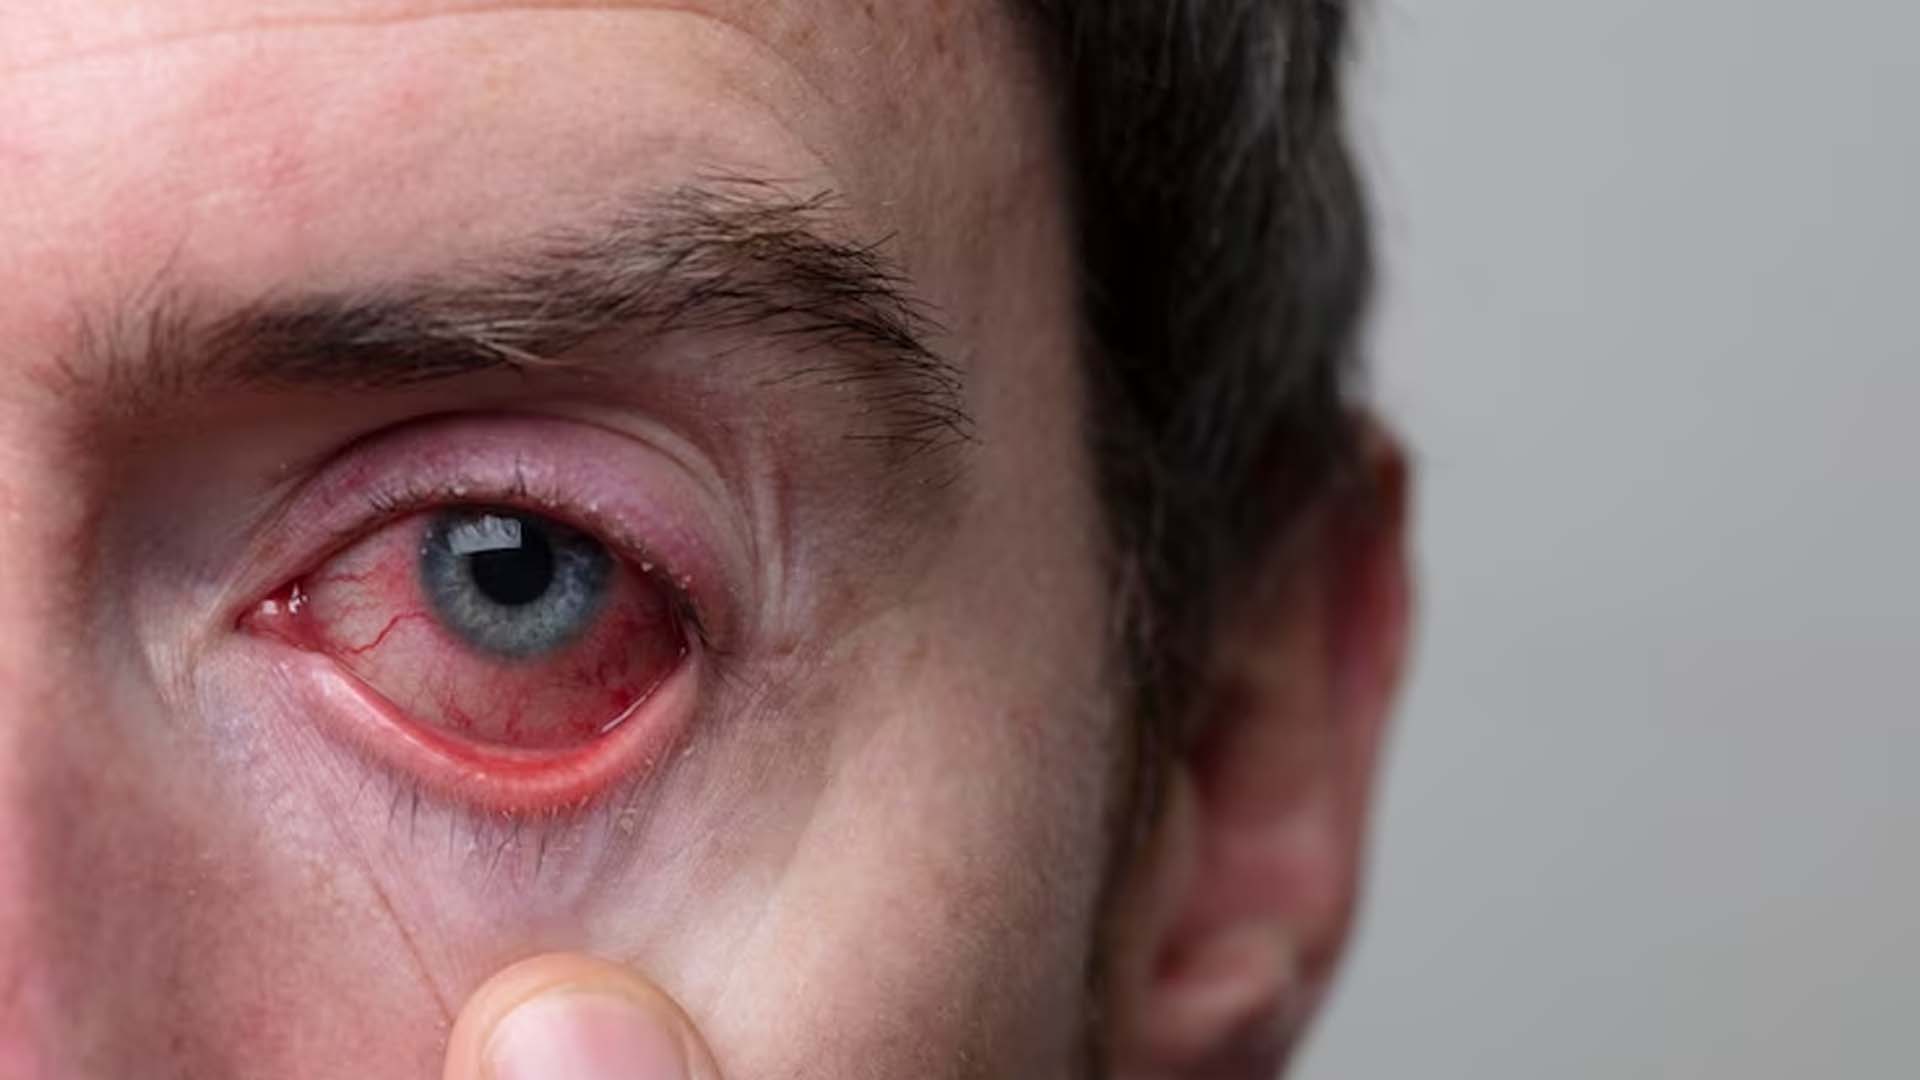 Conjunctivitis or Pink eye